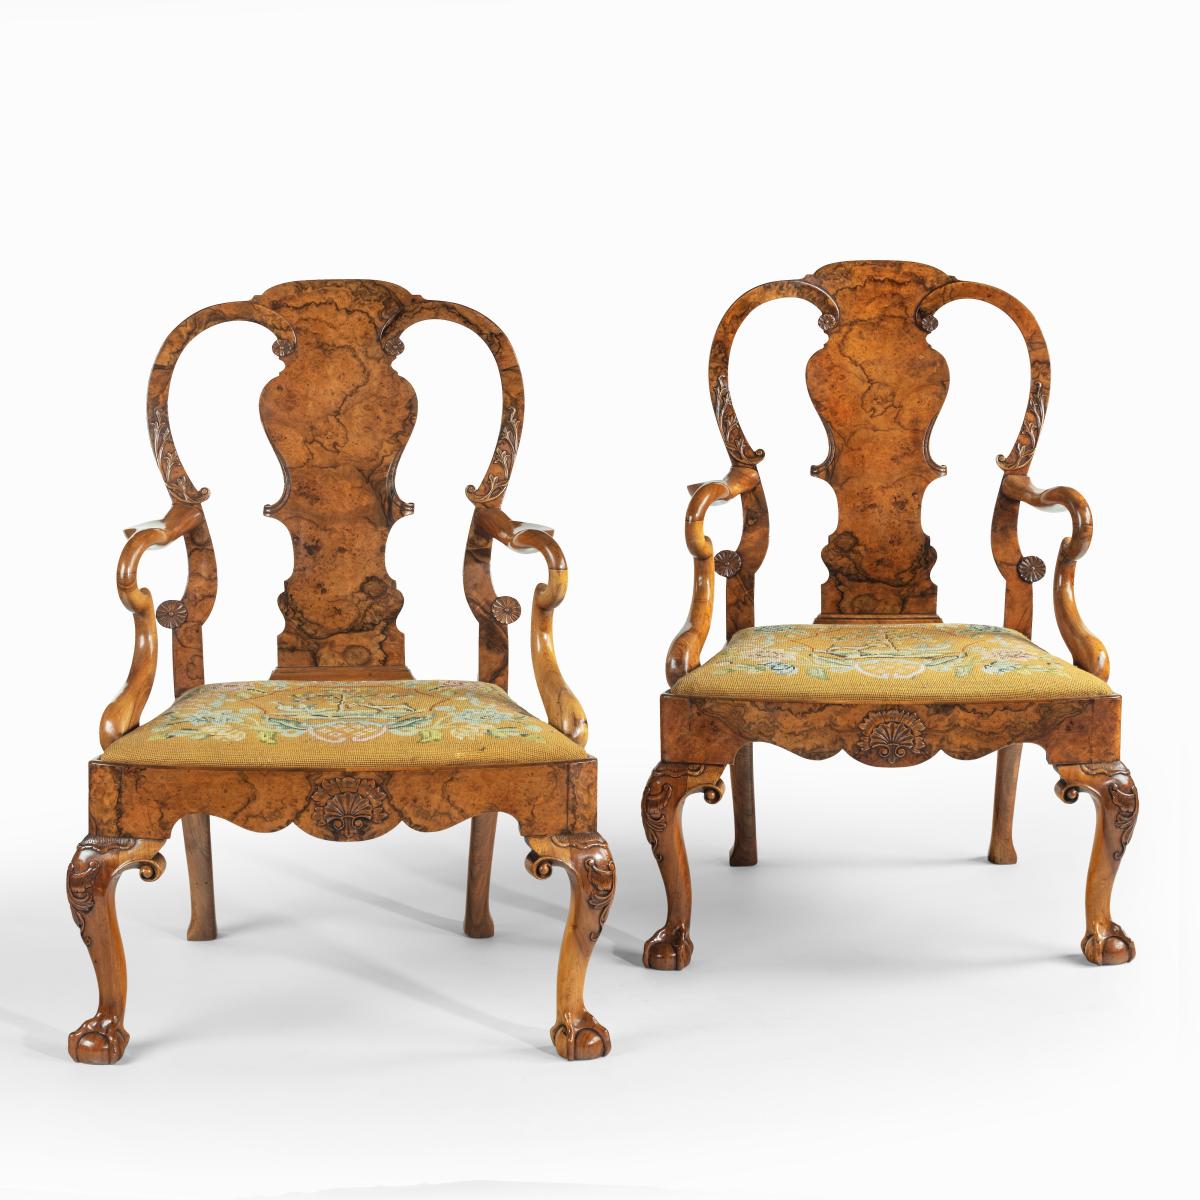 George II style walnut open arm chairs